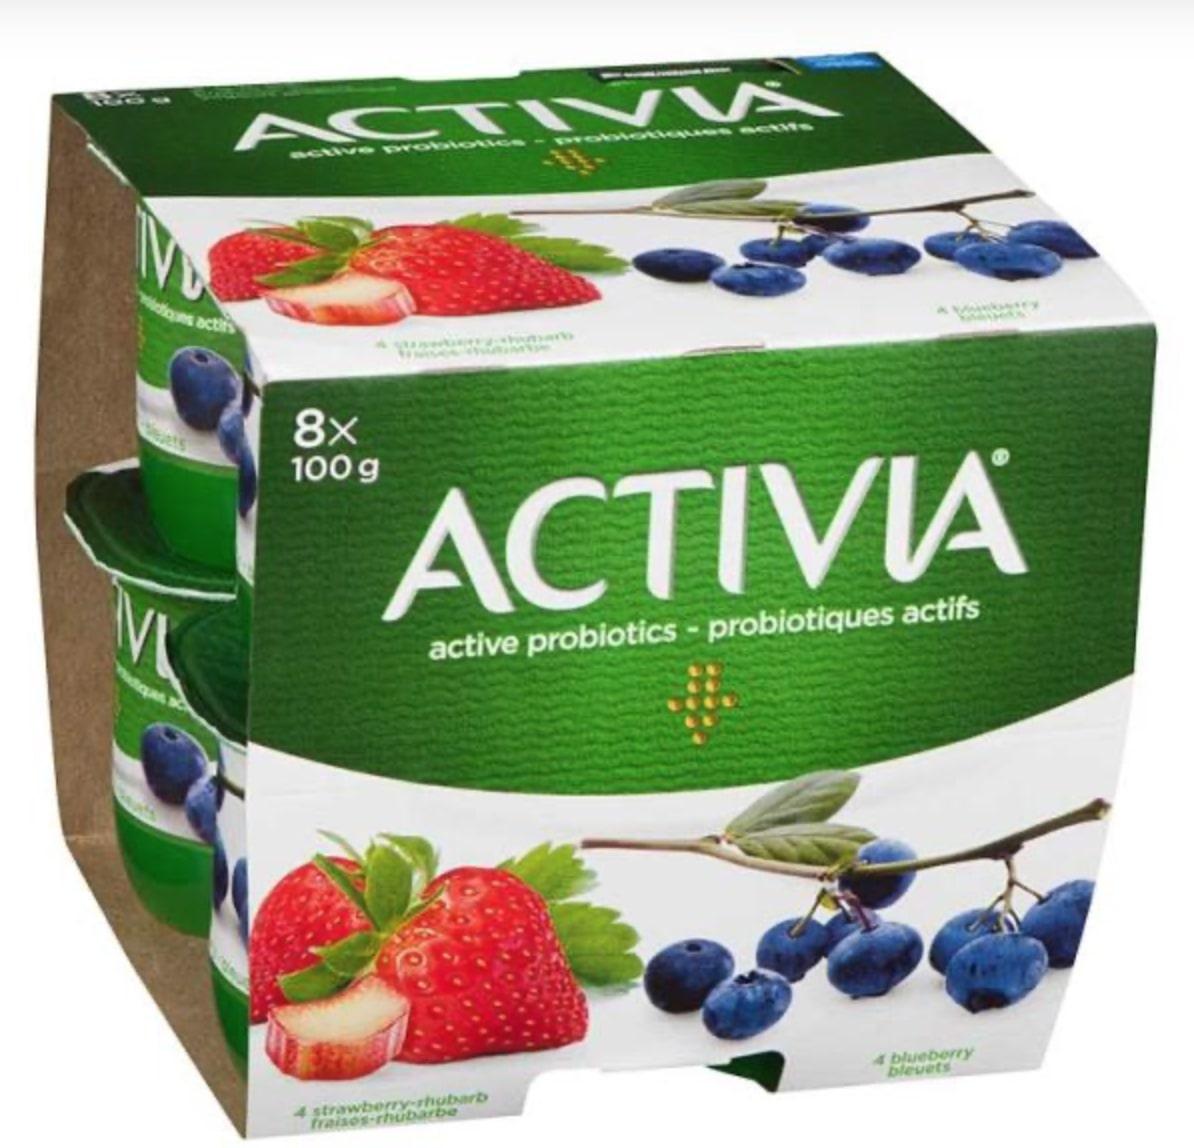 activia-strawberryblueberry-yogurt